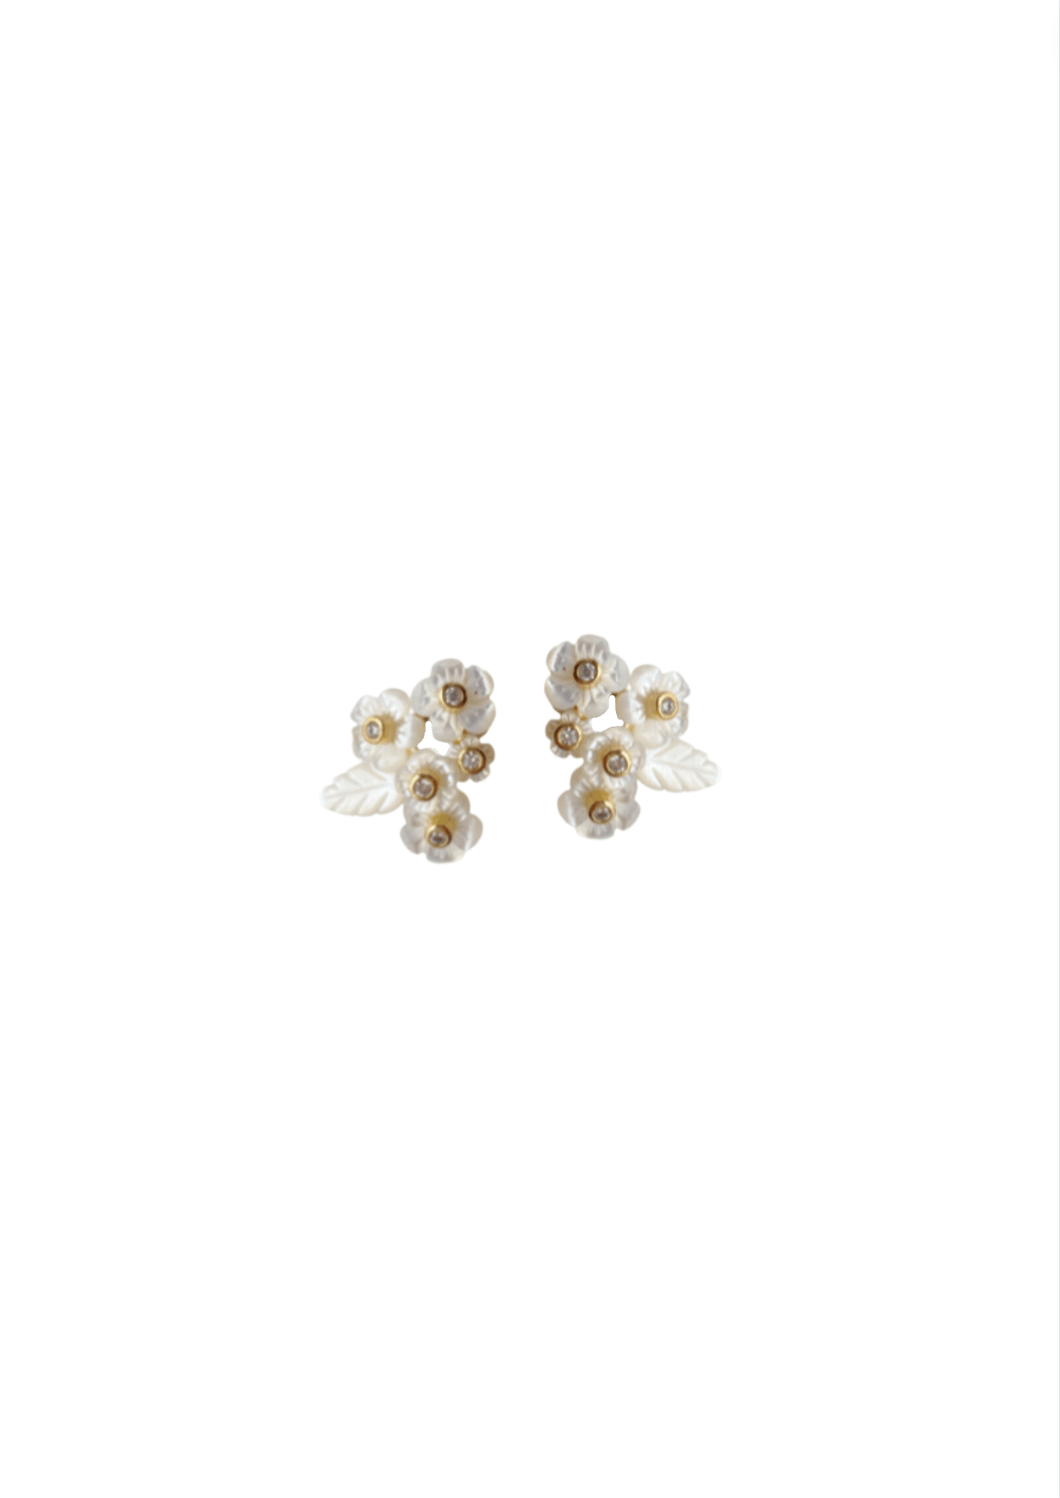 Nicola Bathie Jewelry Earrings Pre-Order - Petite Mother of Pearl Garden Bouquet